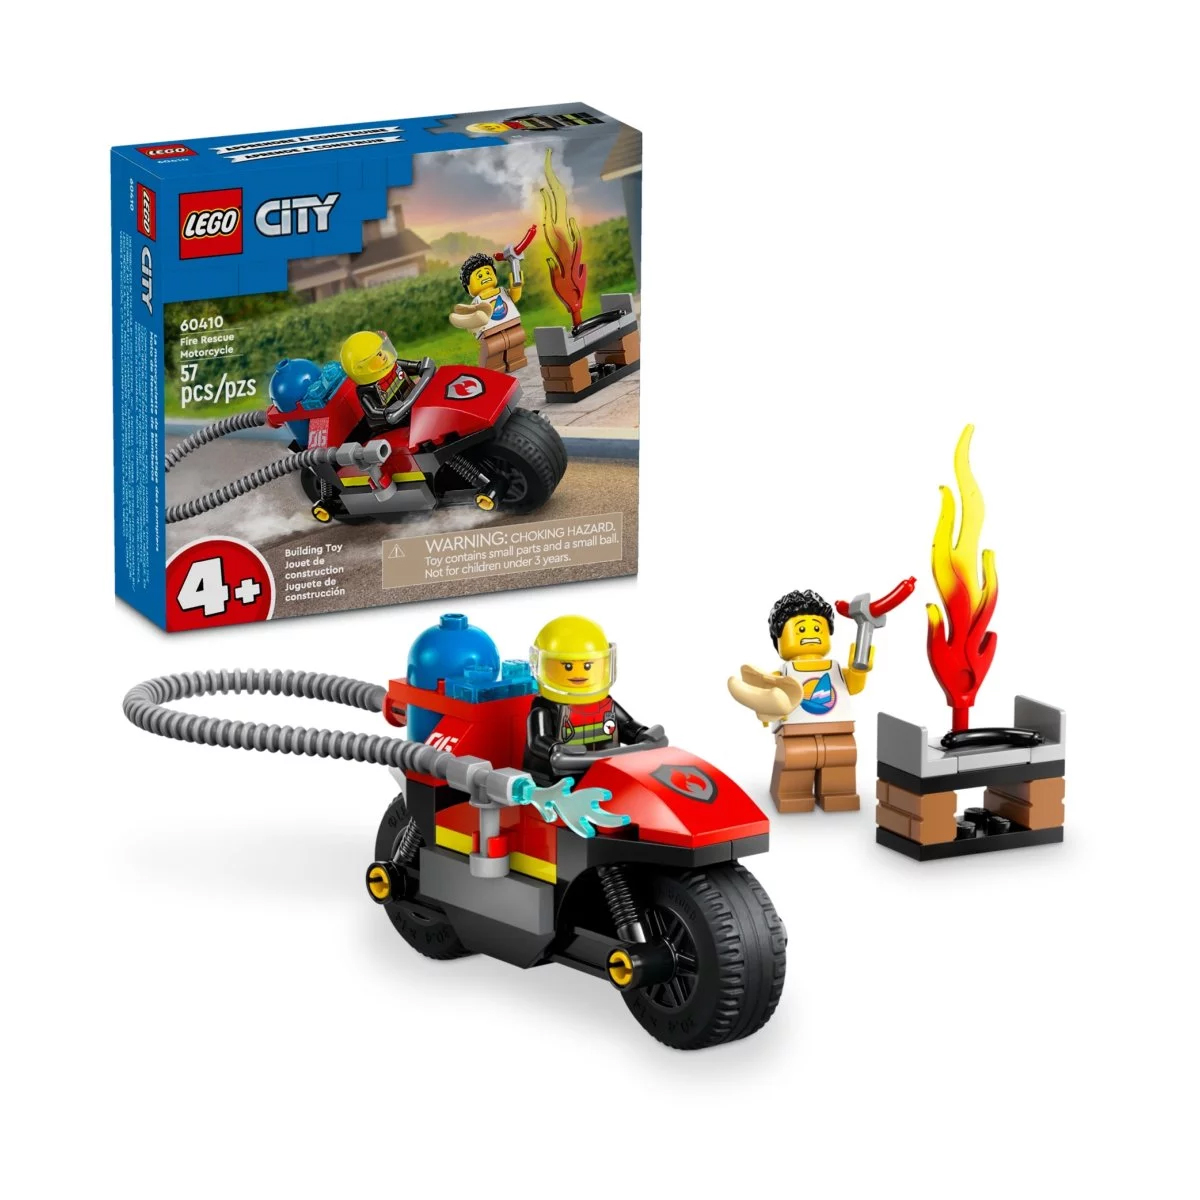 Конструктор Lego City Fire Rescue Motorcycle 60410, 57 деталей lego city 30368 fire rescue water scooter 32 дет